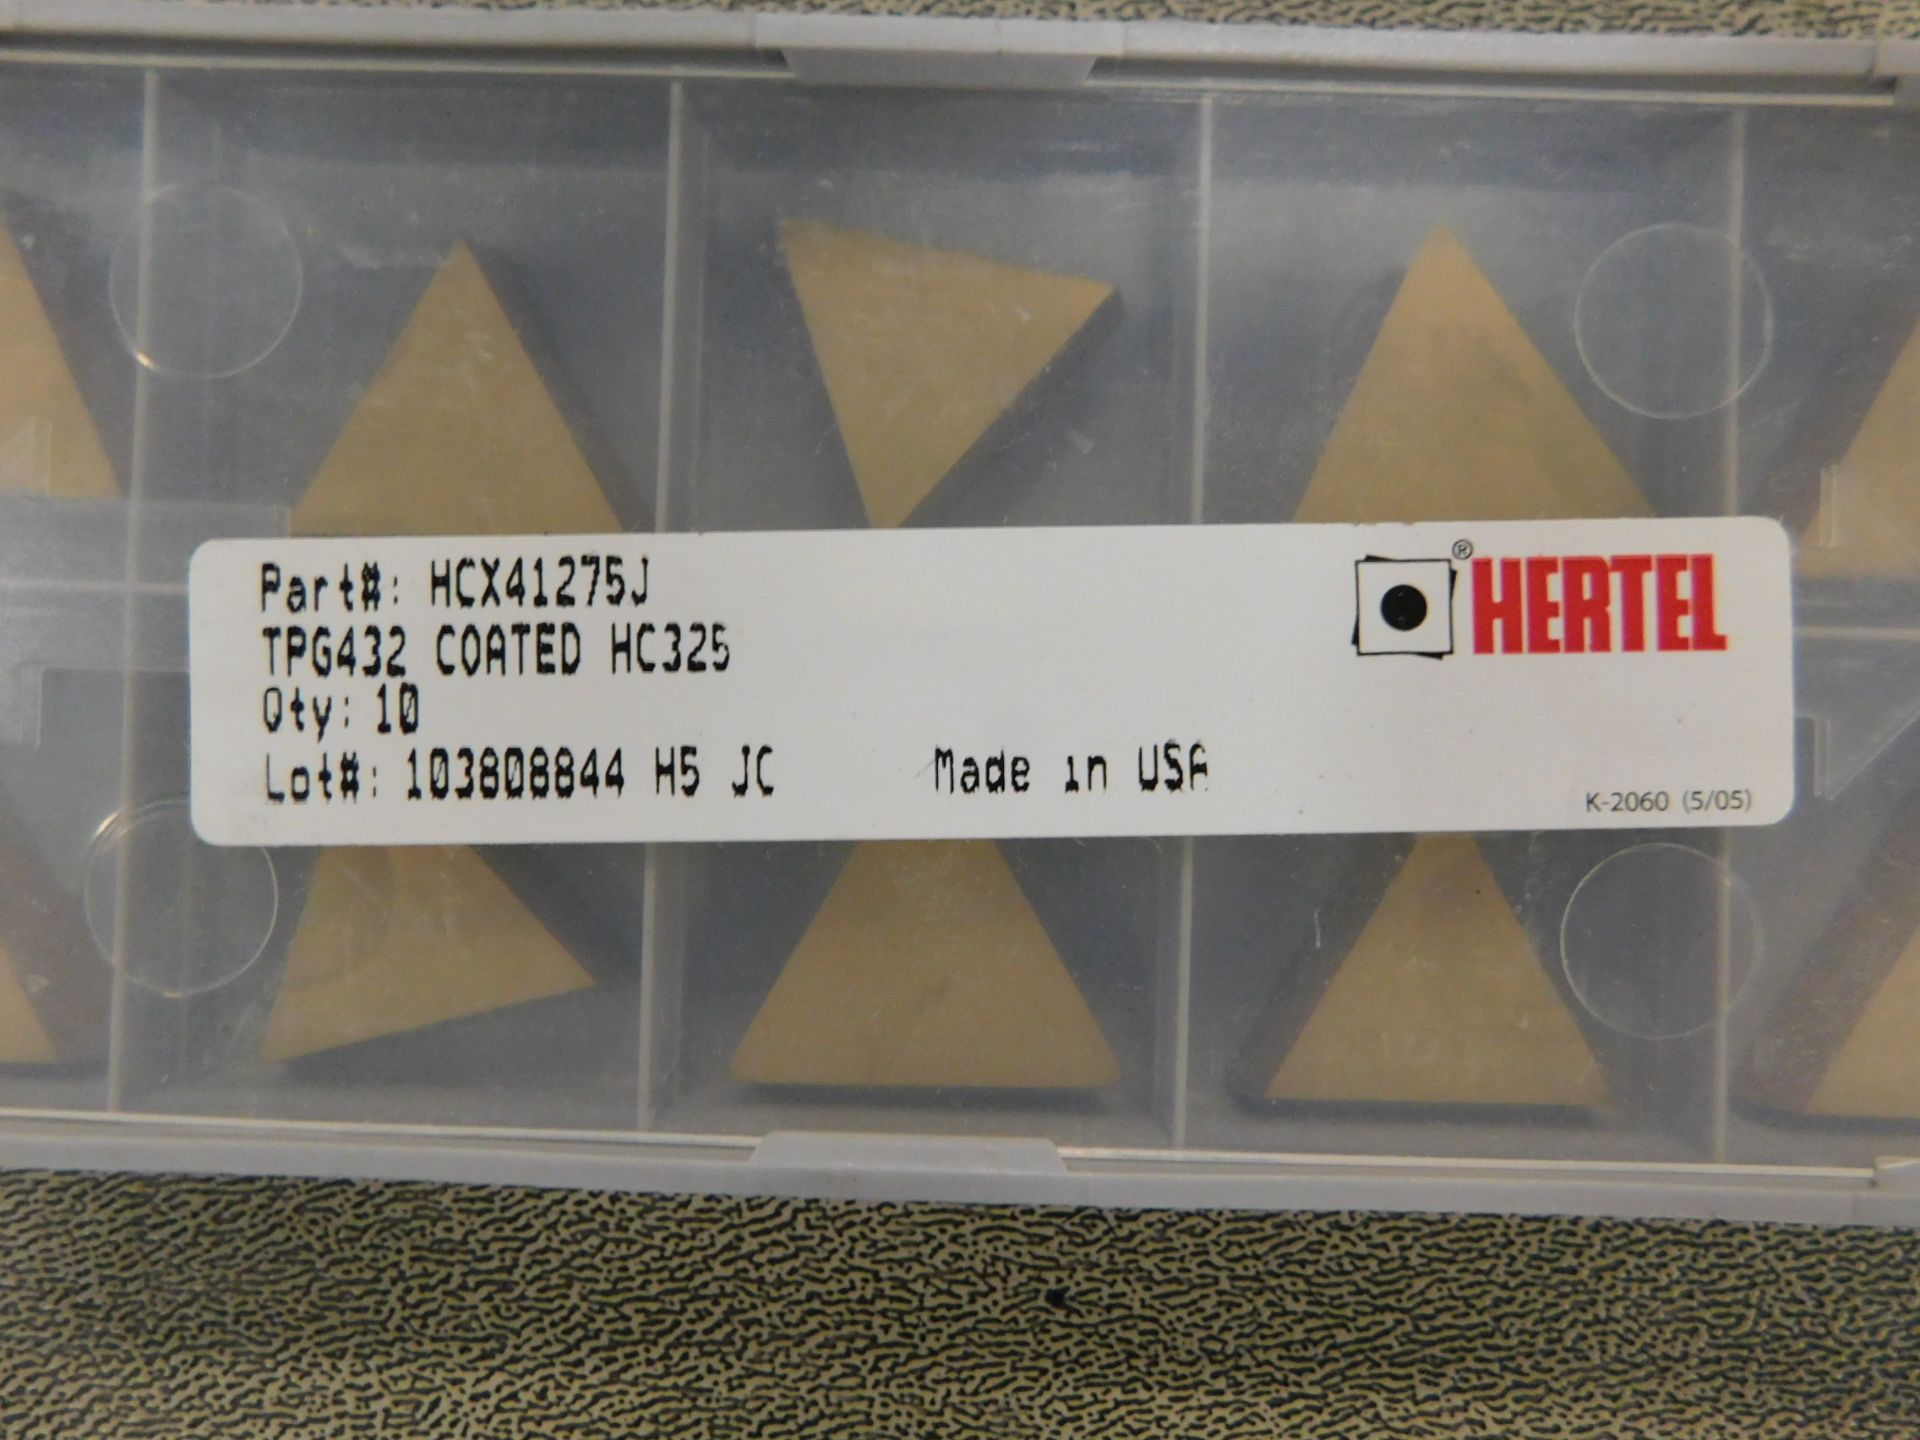 Hertel #HCX41275J/TPG432 Carbide Inserts - Image 2 of 3